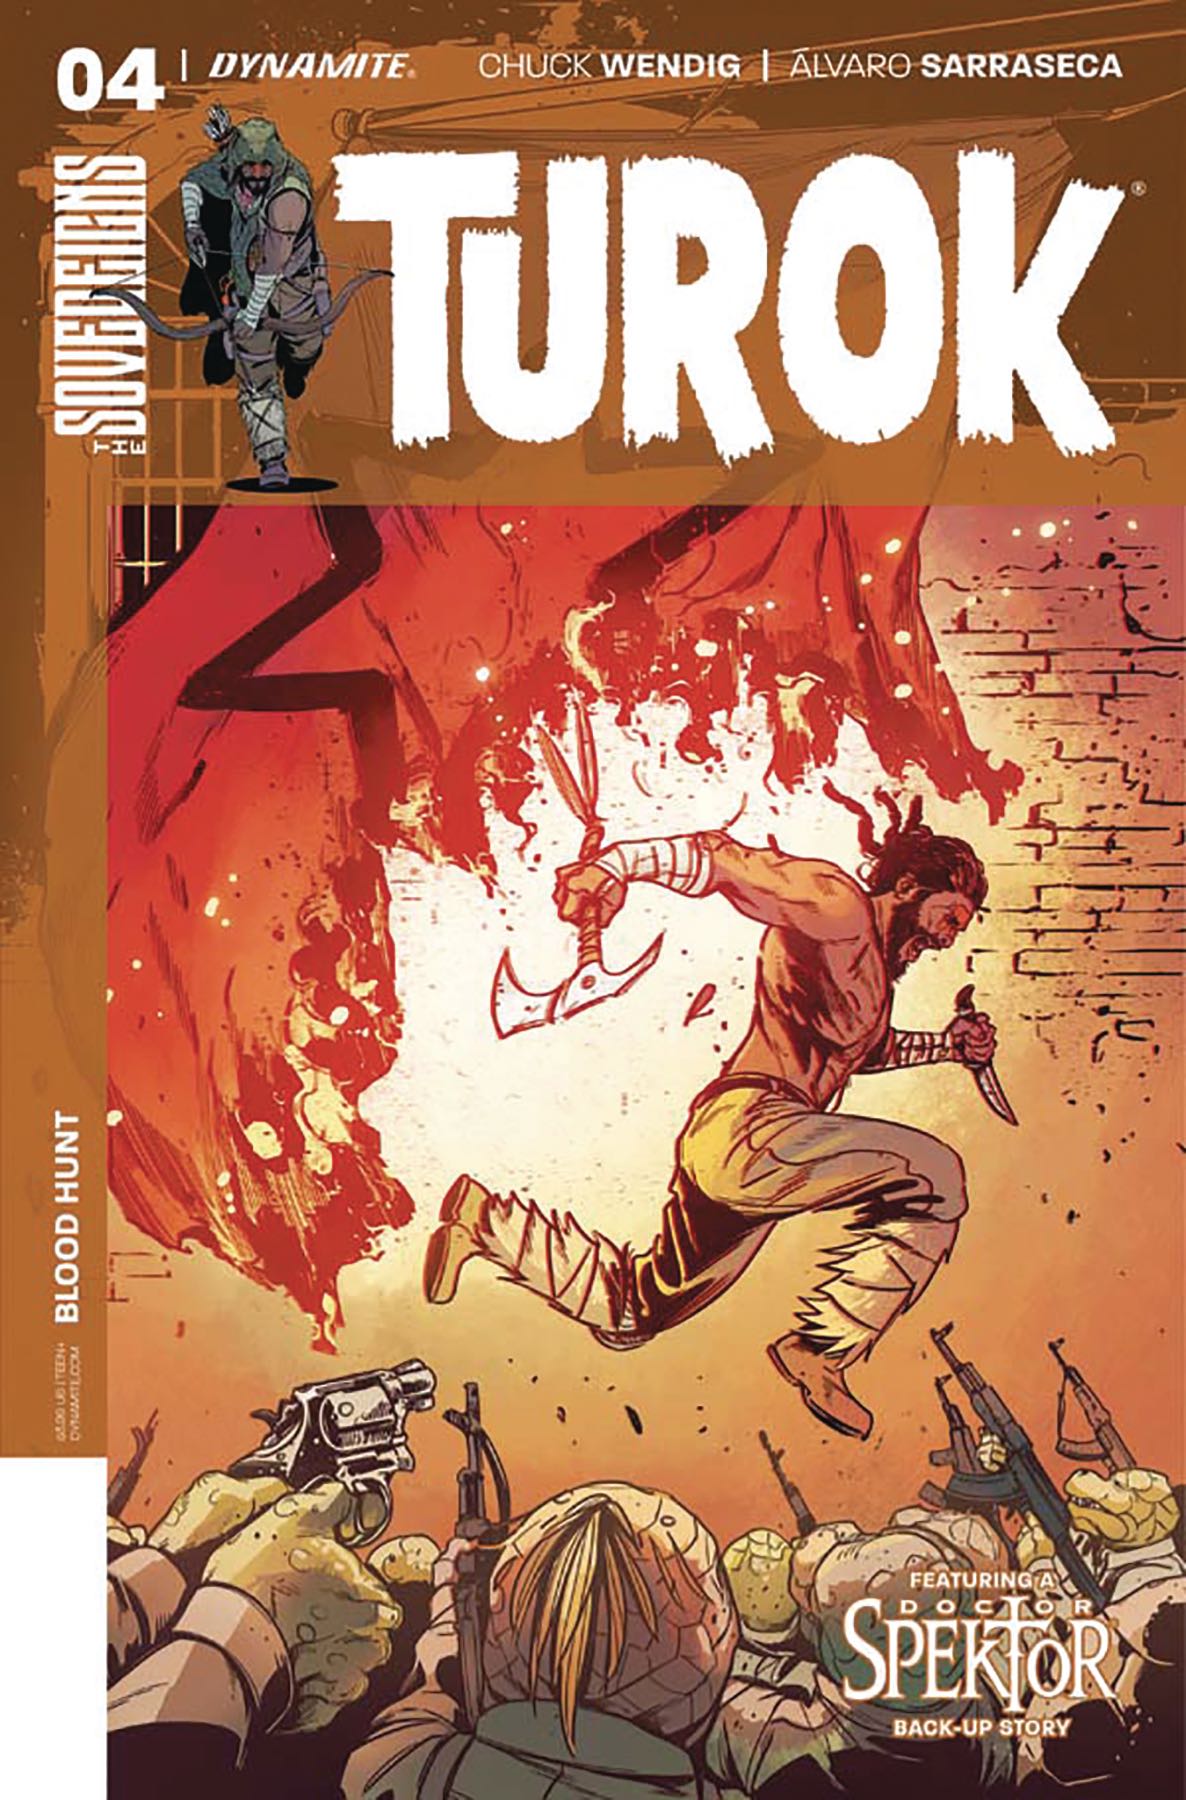 Turok #4 (Sarraseca Cover) | Fresh Comics1186 x 1800